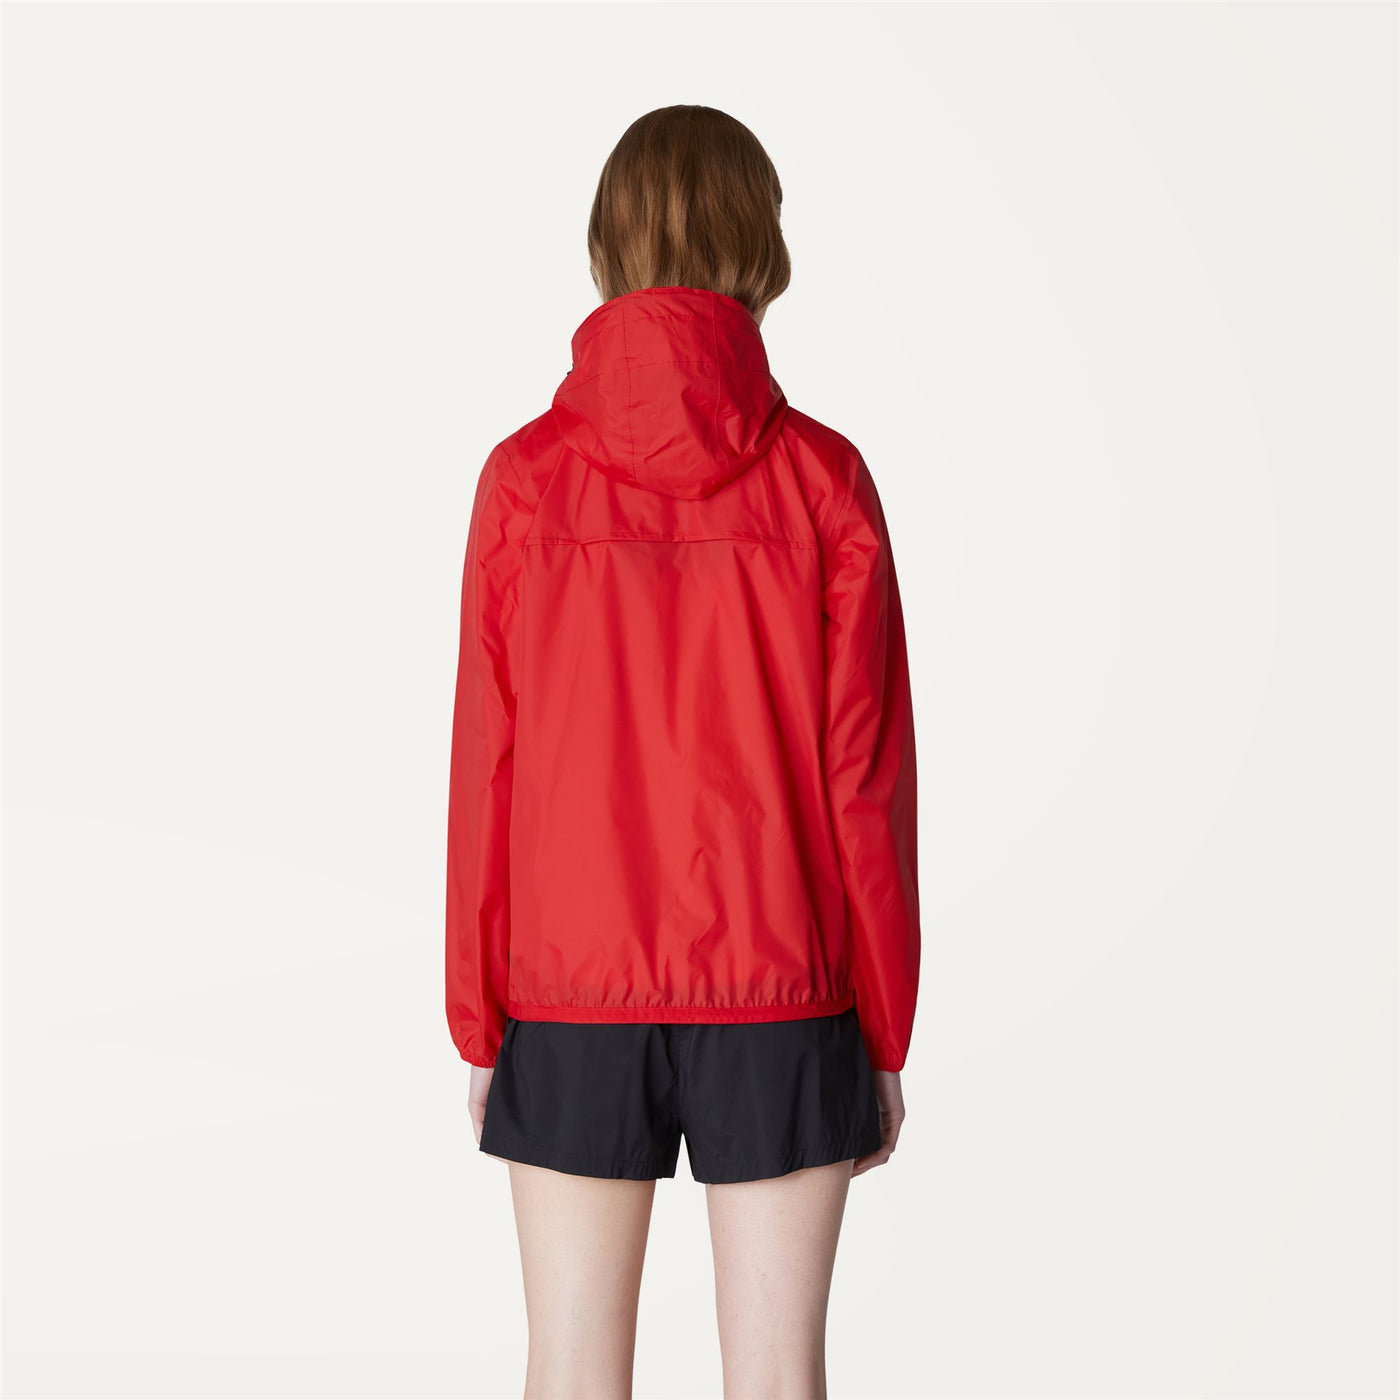 Jackets Woman LE VRAI 3.0 Claudette Mid RED Dressed Front Double		